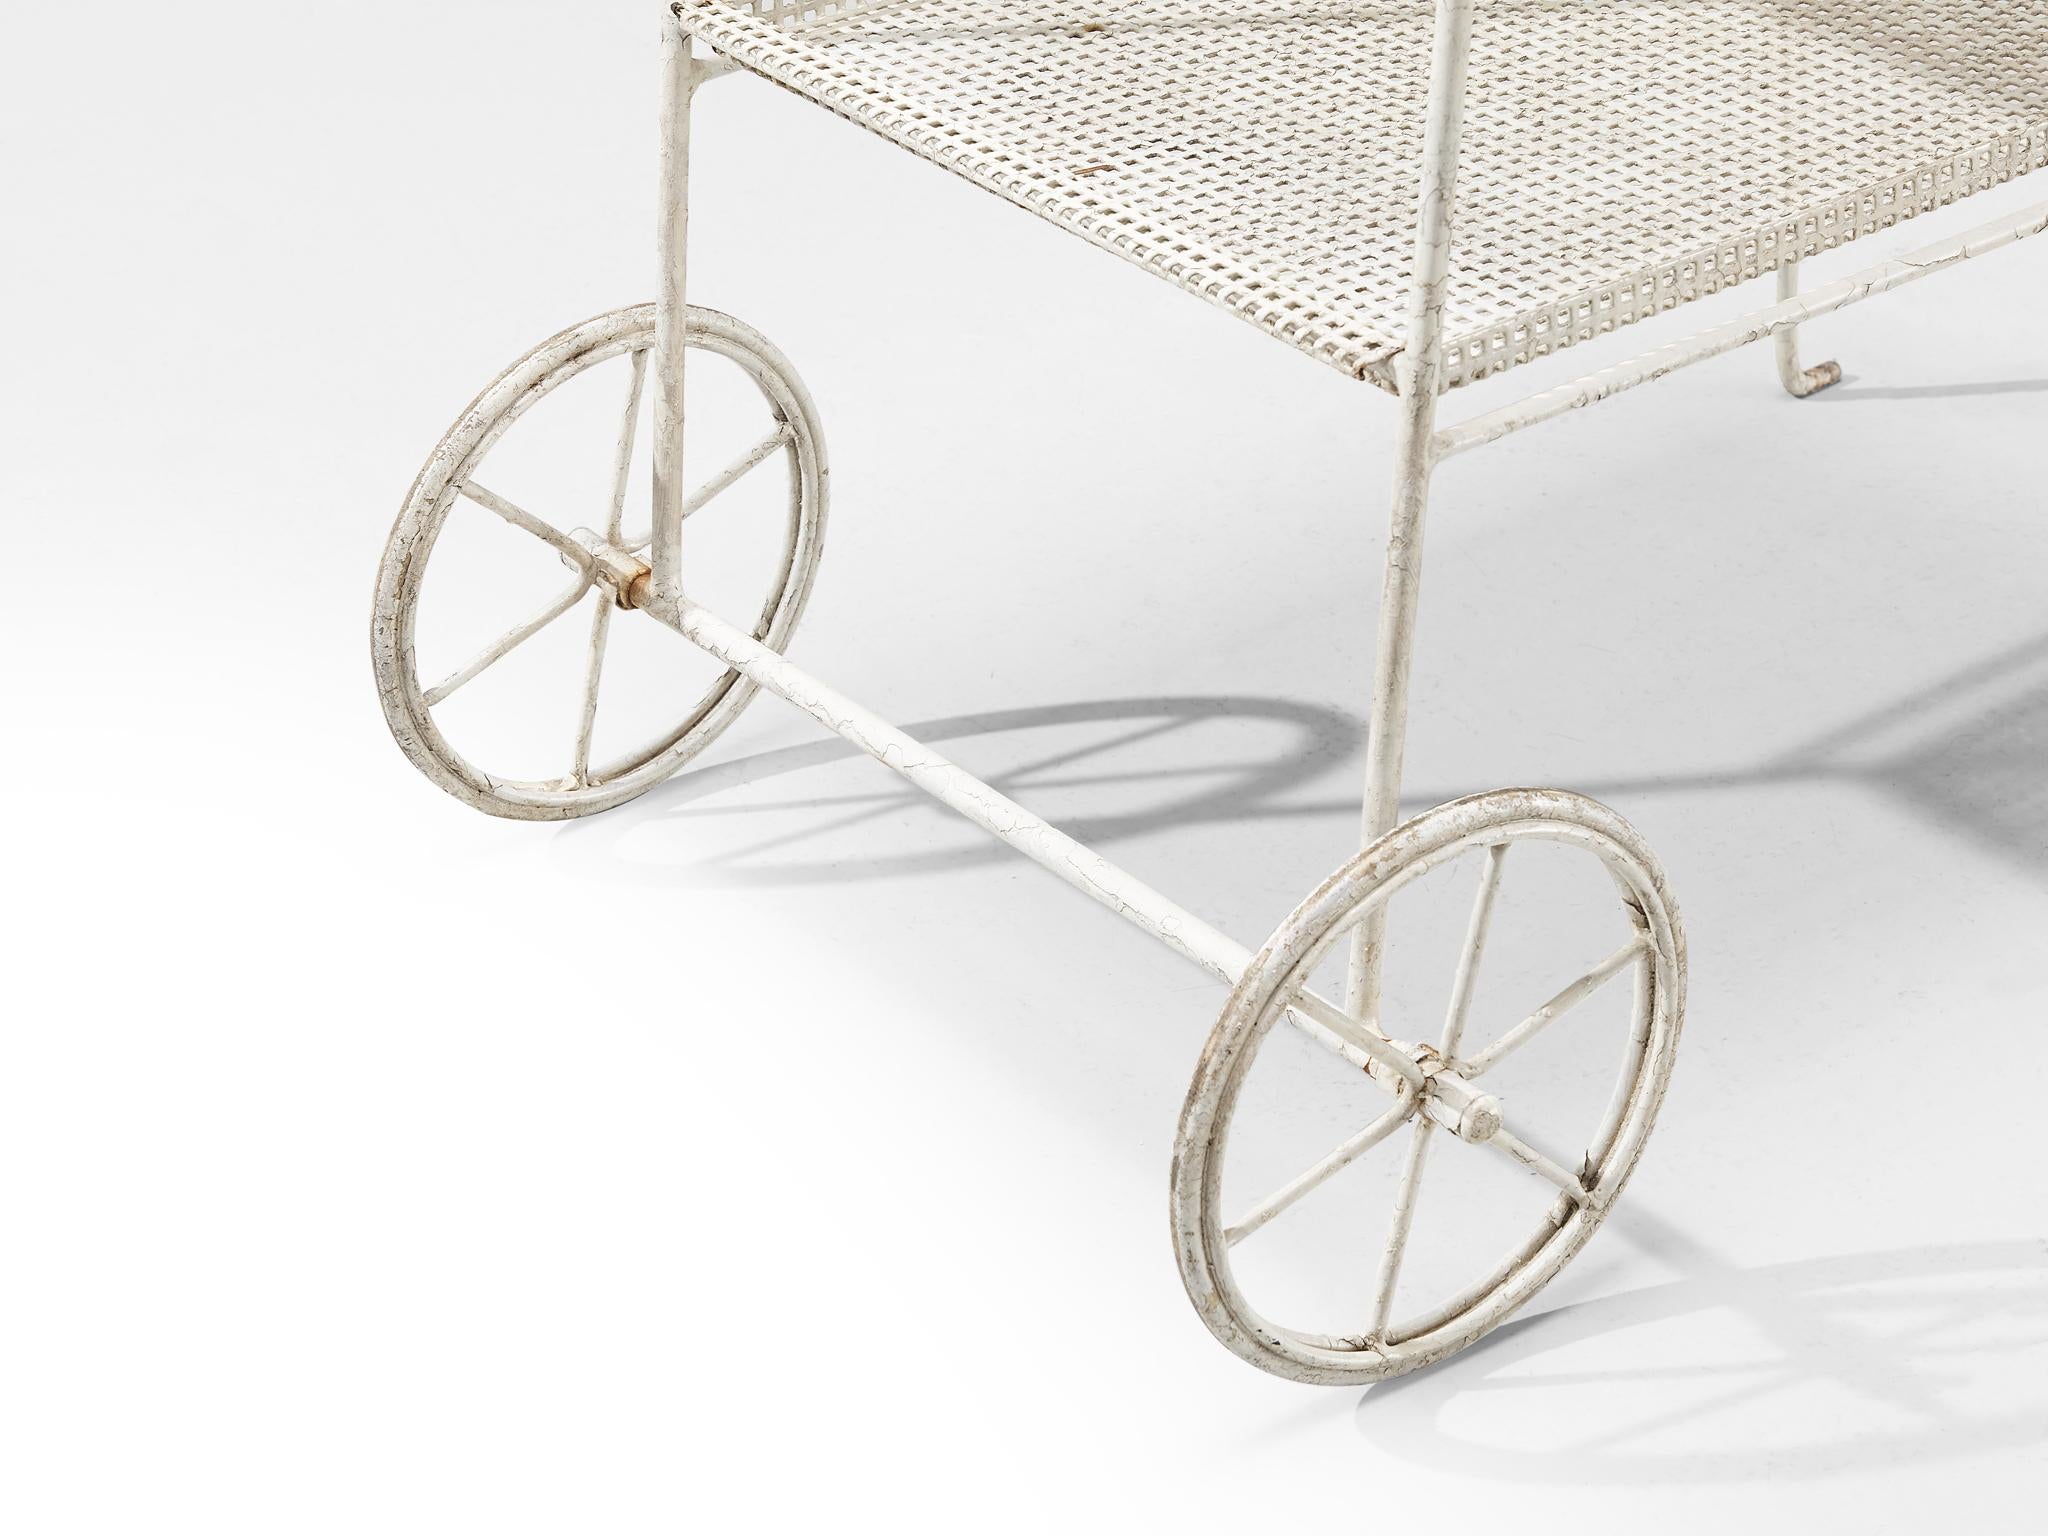 Elegant French Bar Cart with Mesh Framework in Iron